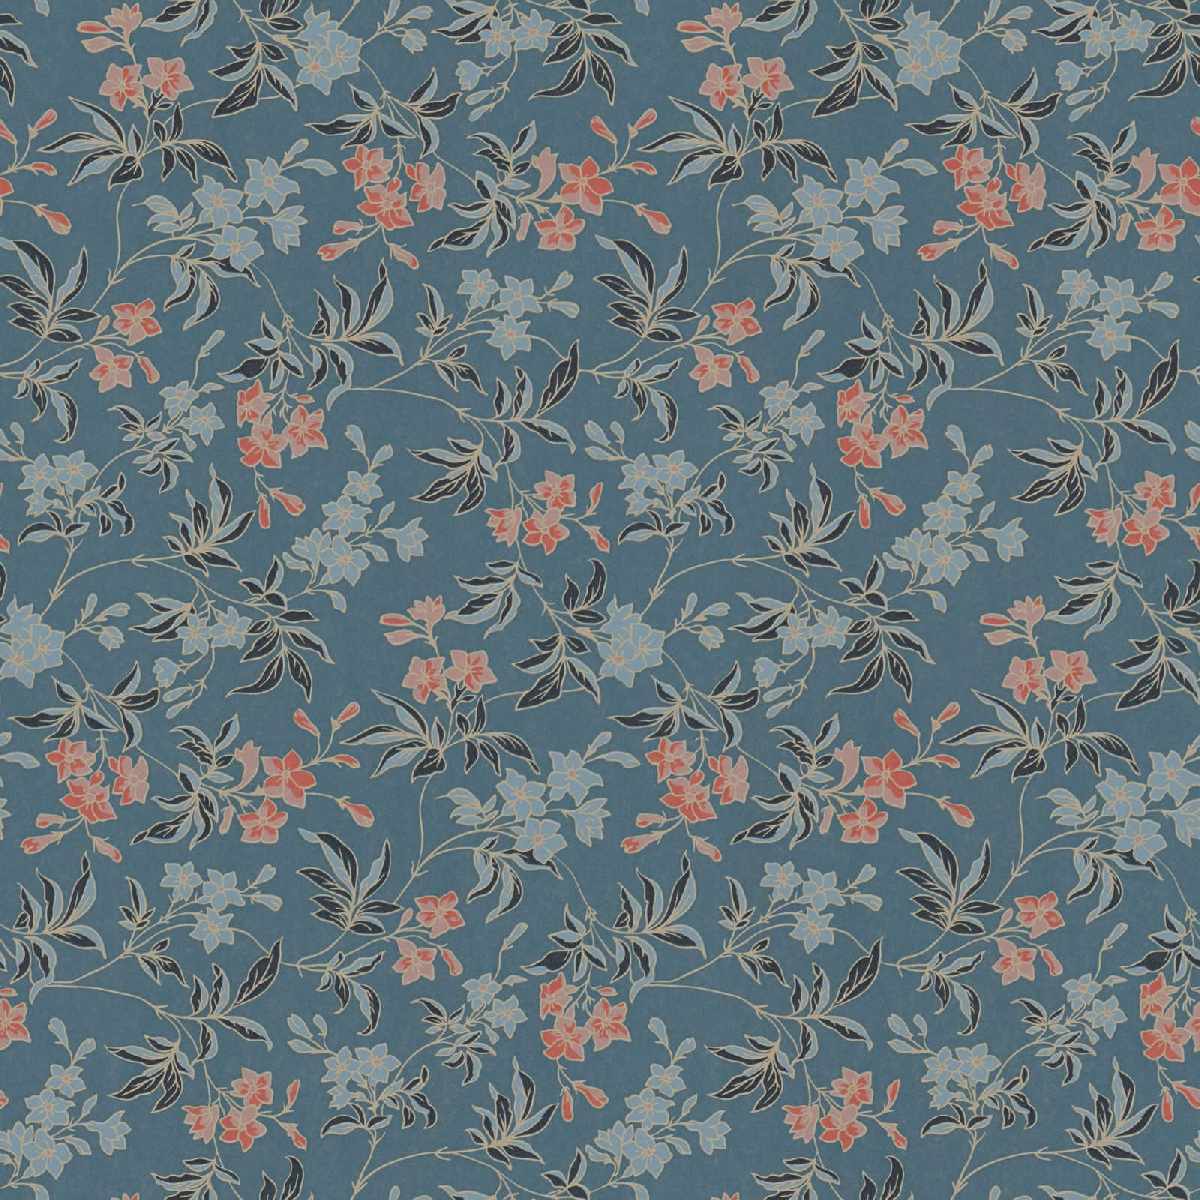 Vliestapete Art of Eden 390634 - Blumentapete Muster – Blau, Rot